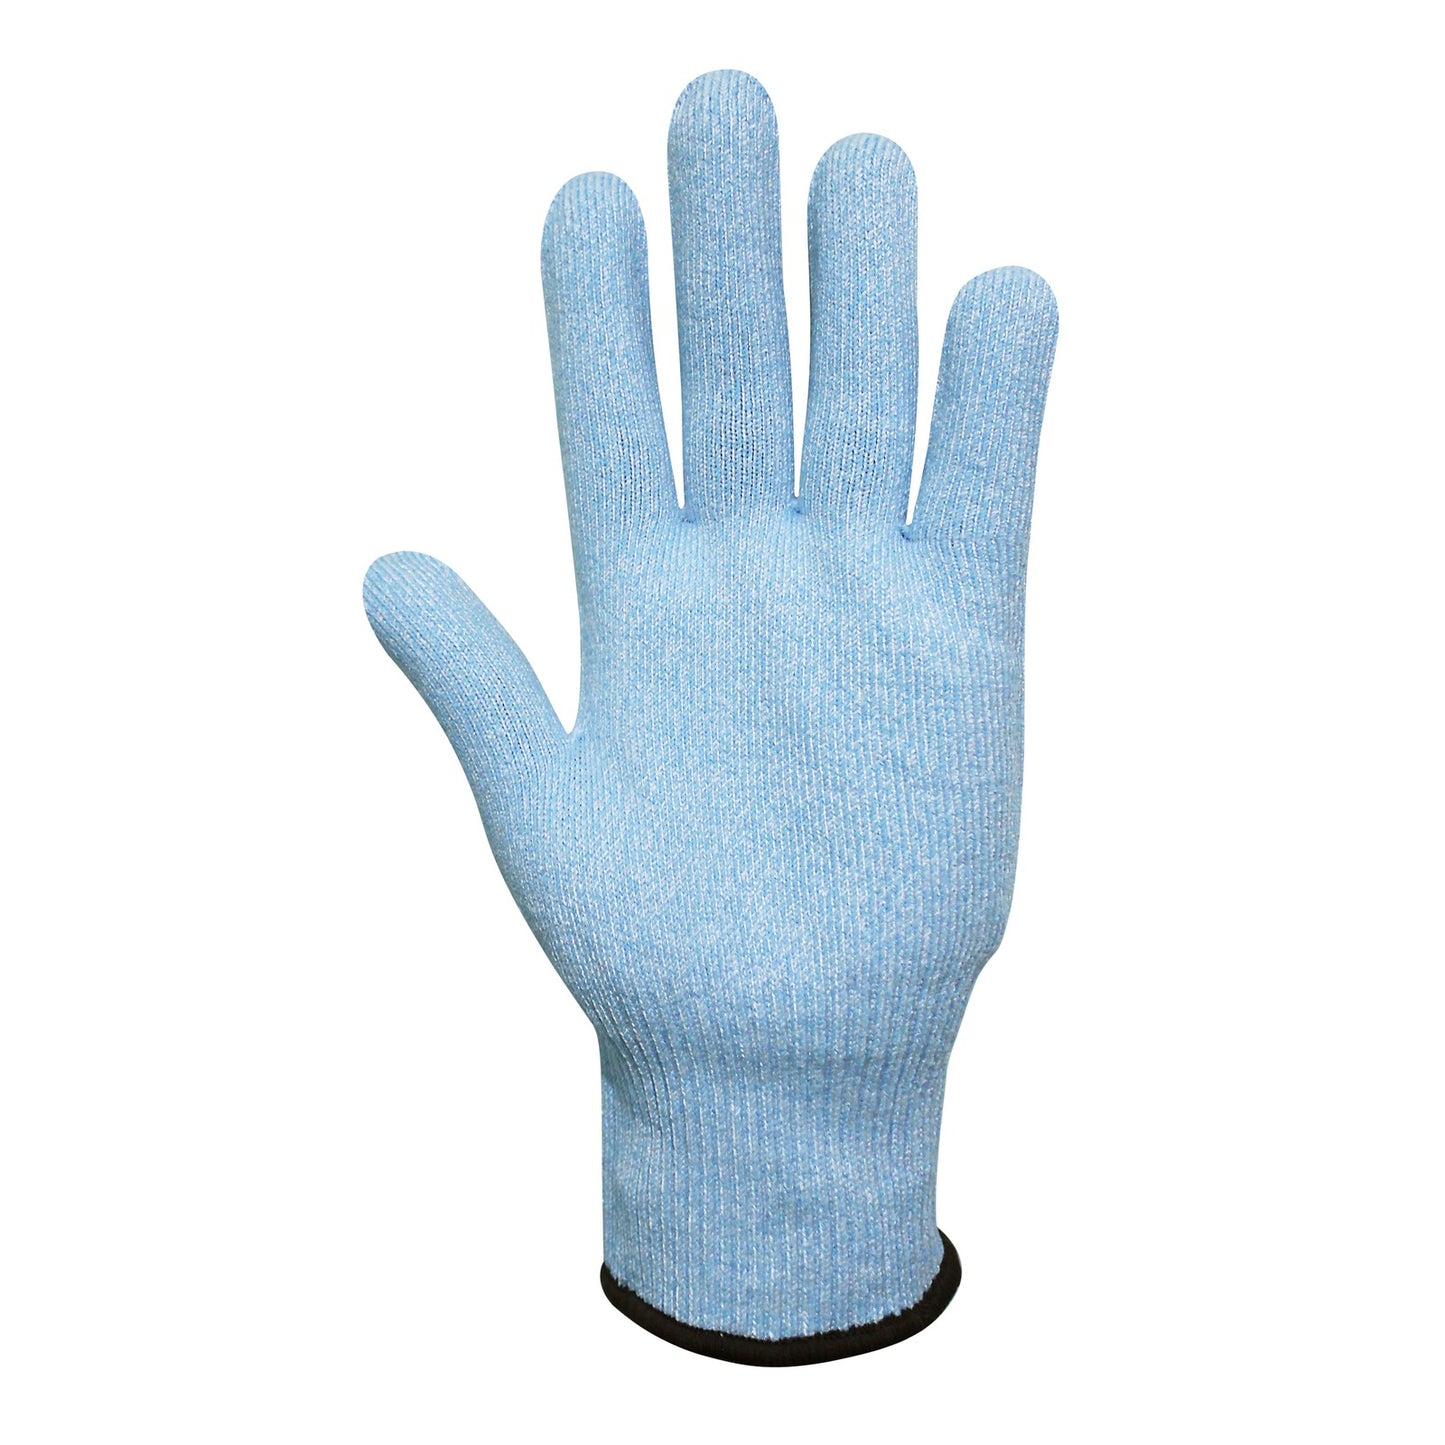 Cut 5 Liner Glove - Blue